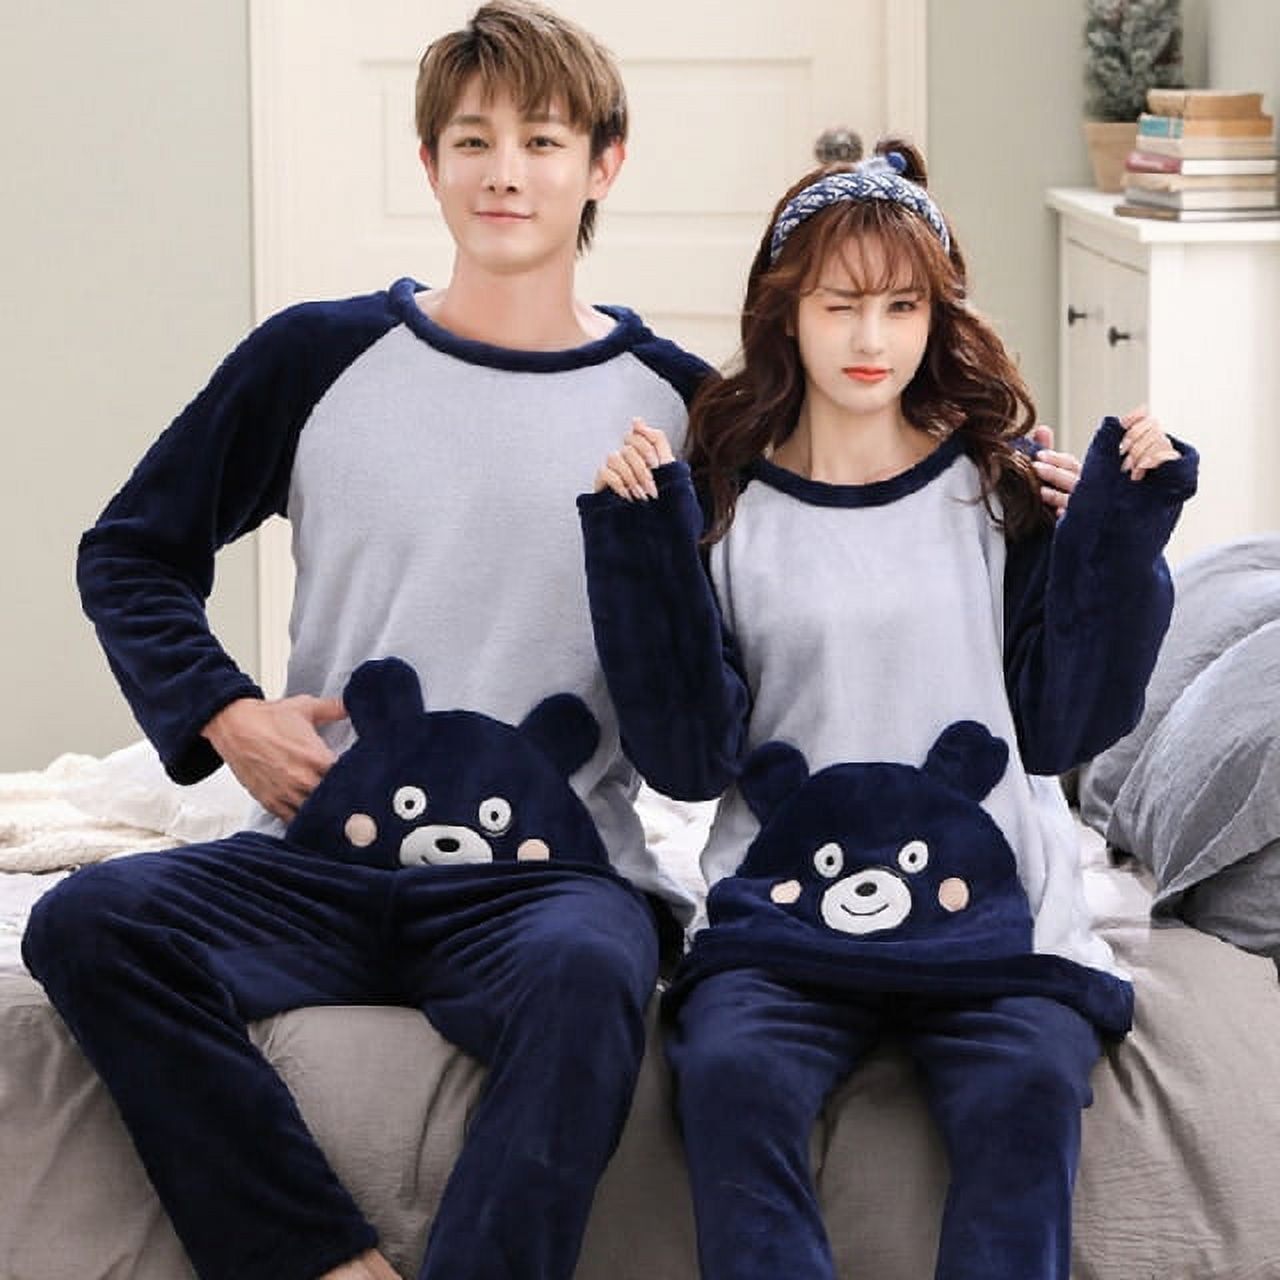 pijamas de pareja - Buscar con Google  Boys clothes style, Matching couple  outfits, Cute sleepwear